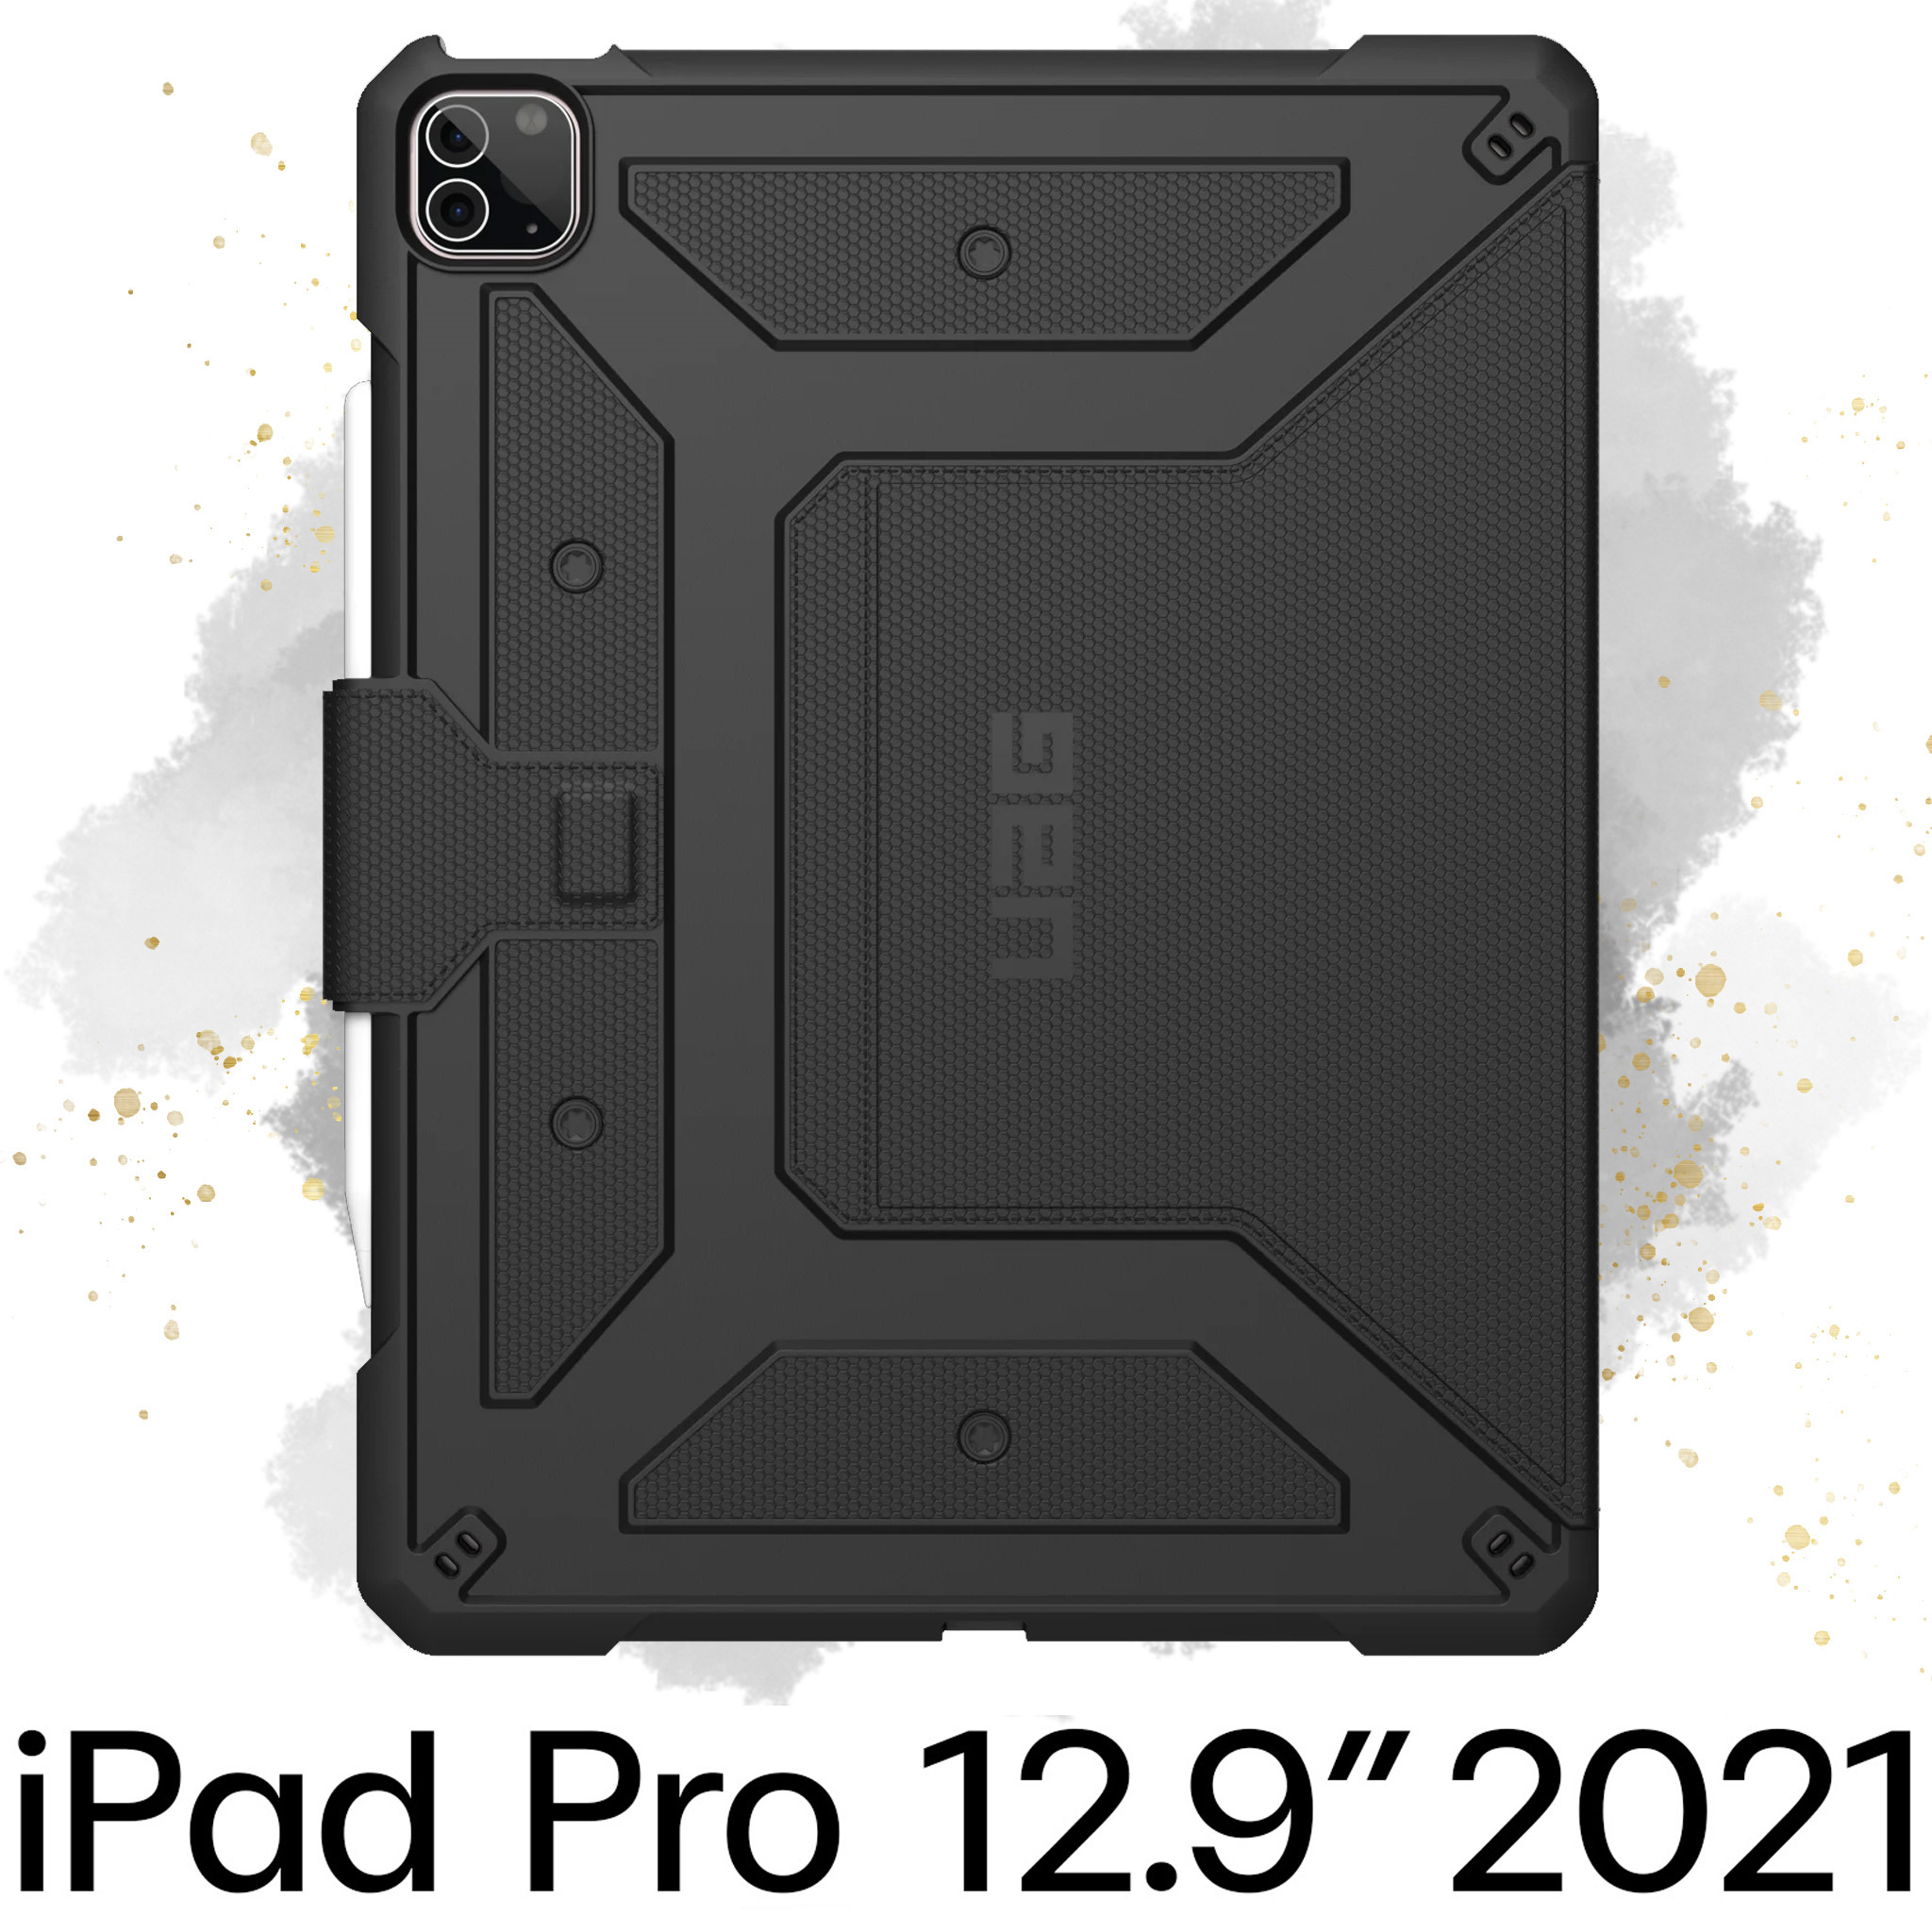 UAG Metropolis สำหรับ iPad Pro 2021 / 2020 / Air4 2020 / Gen 8 / 7 / 6 / 5 / mini 4 / 5 / Air 3 สินค้าแท้รับประกันคุณภาพ